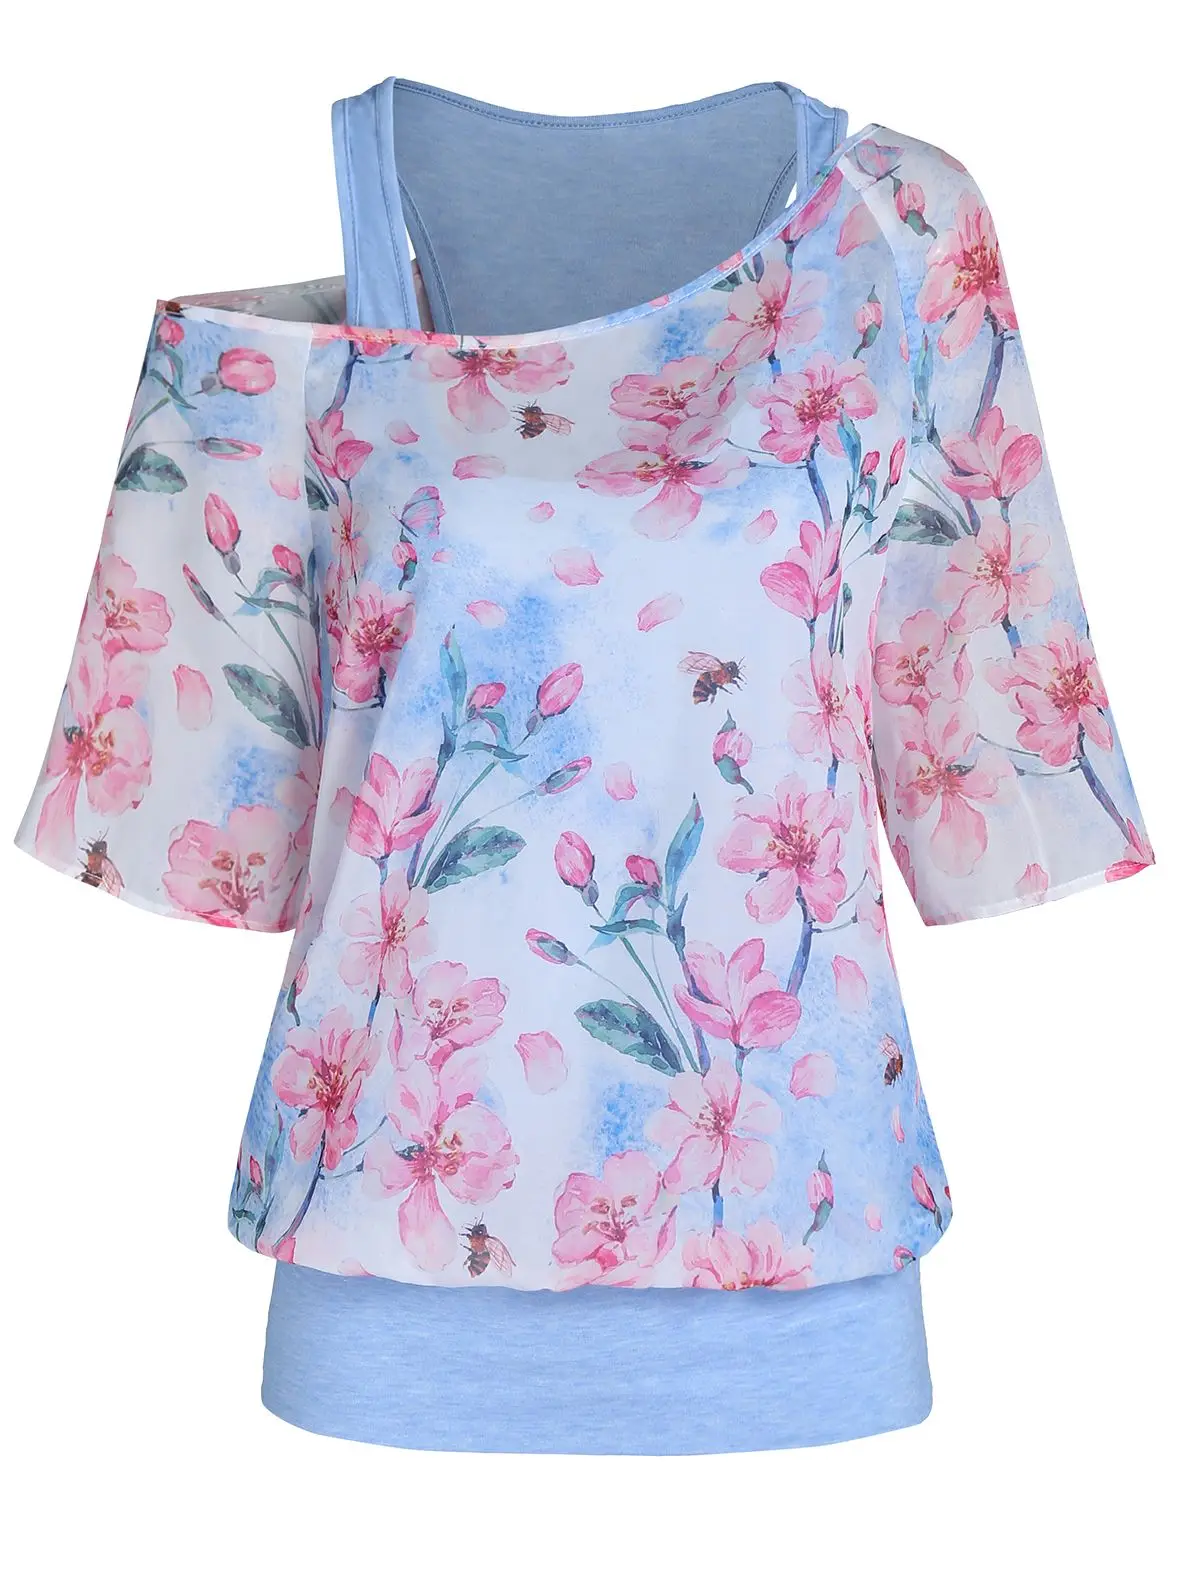 

Dressfo Oblique Shoulder Women T Shirt Skew Neck Flower Print Summer Floral Tops Half Sleeve 2 In 1 Style Printed Top